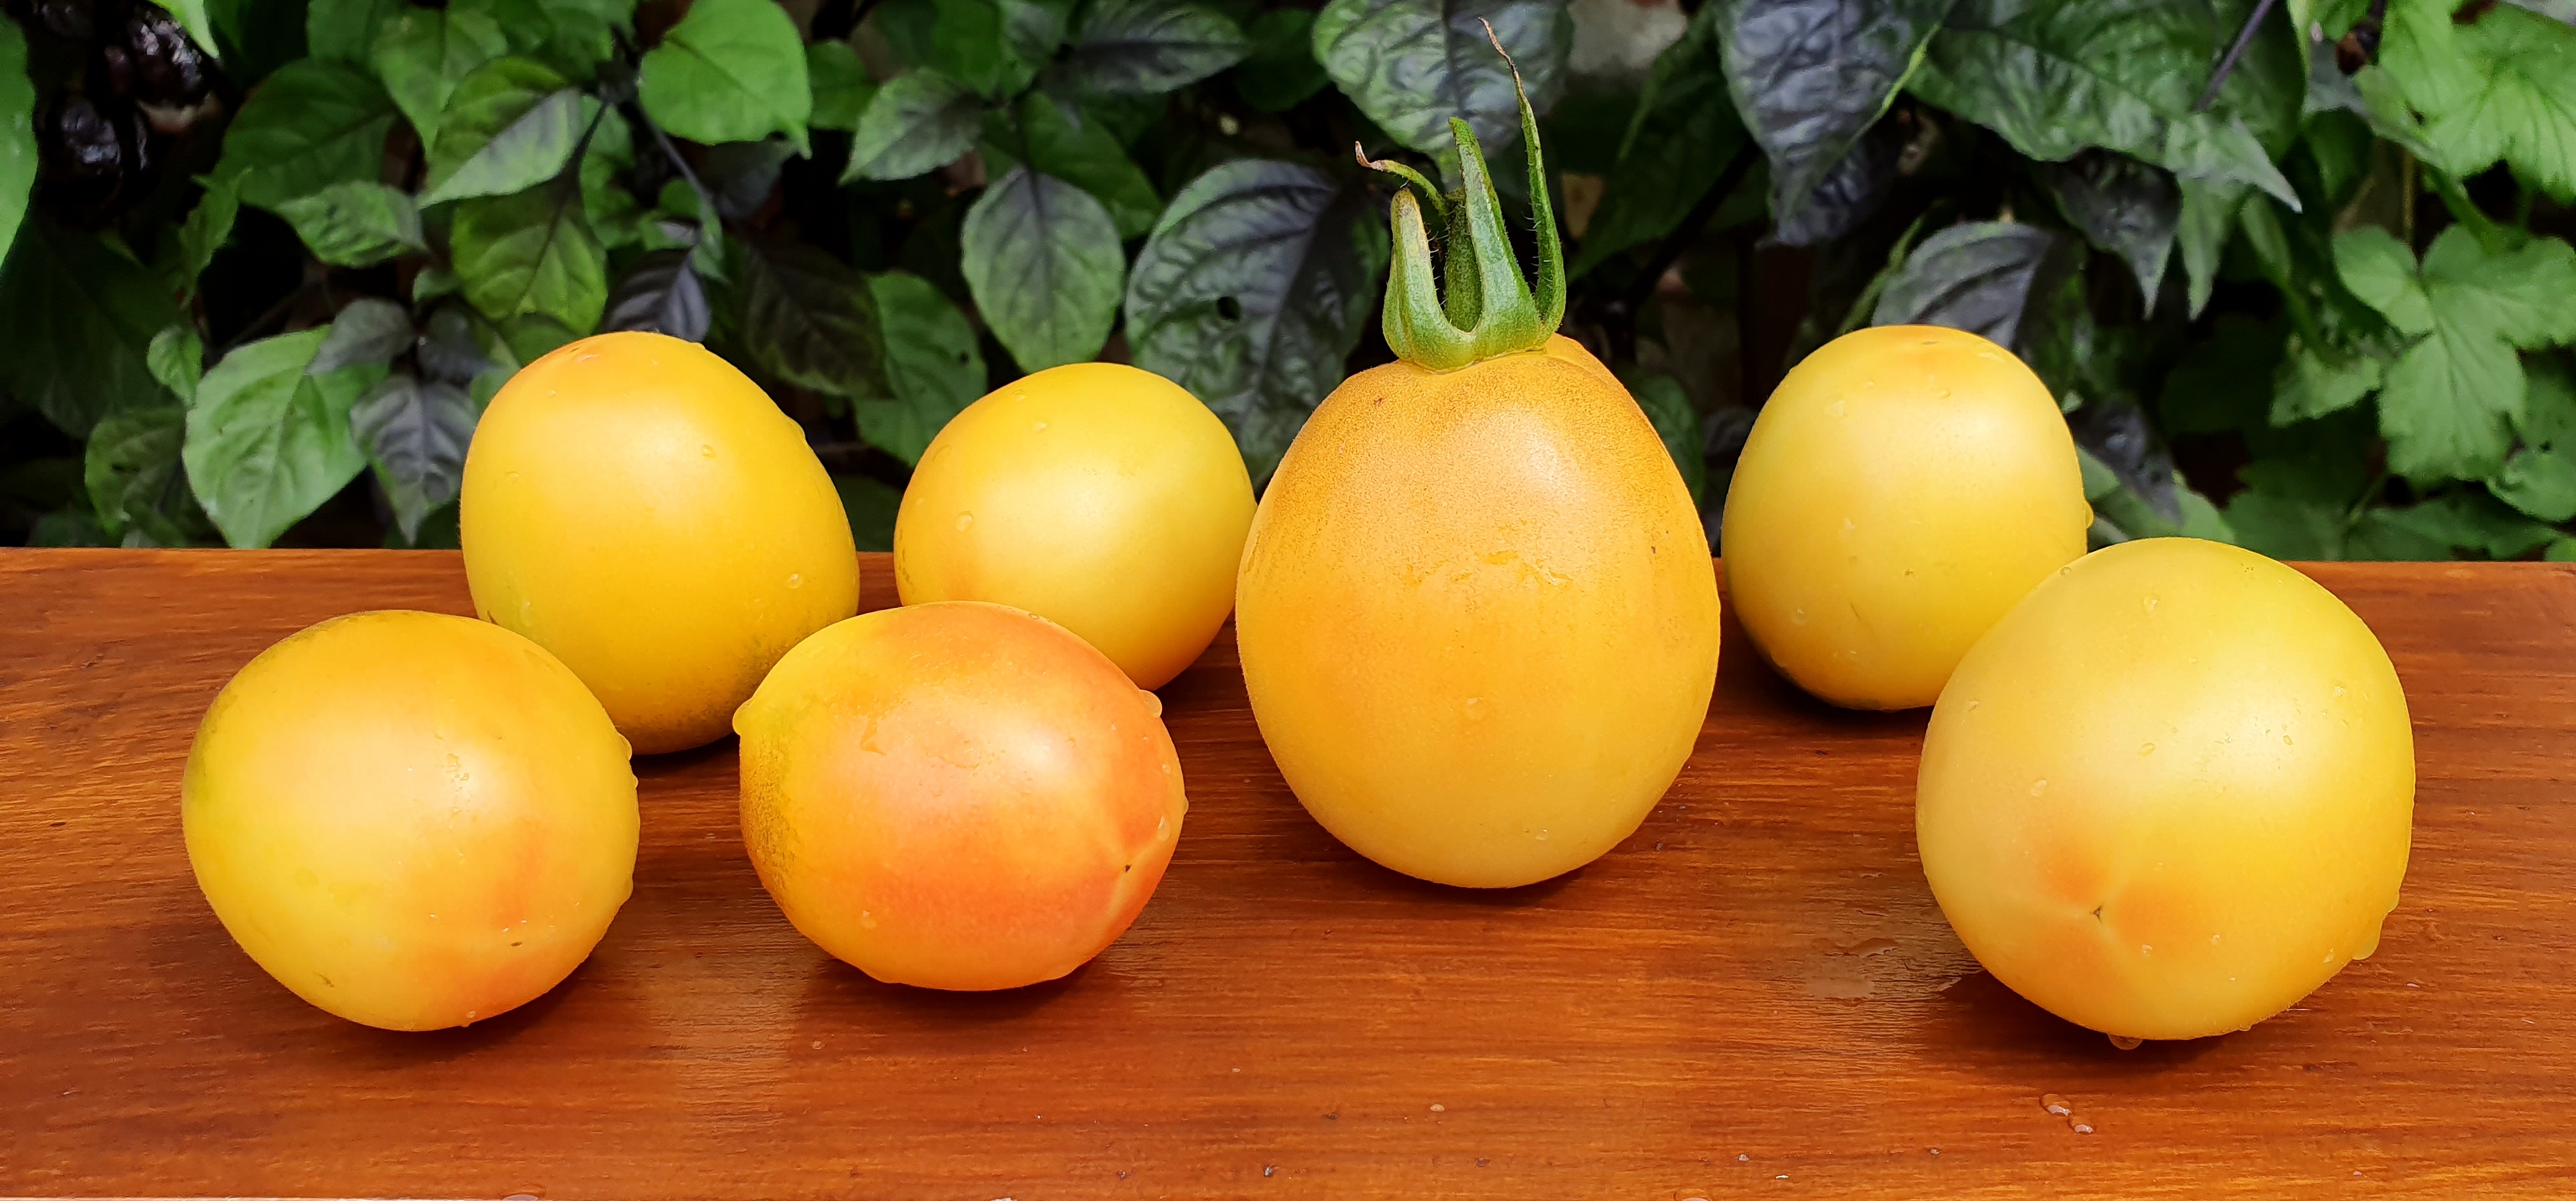 yellow tomatoes varieties